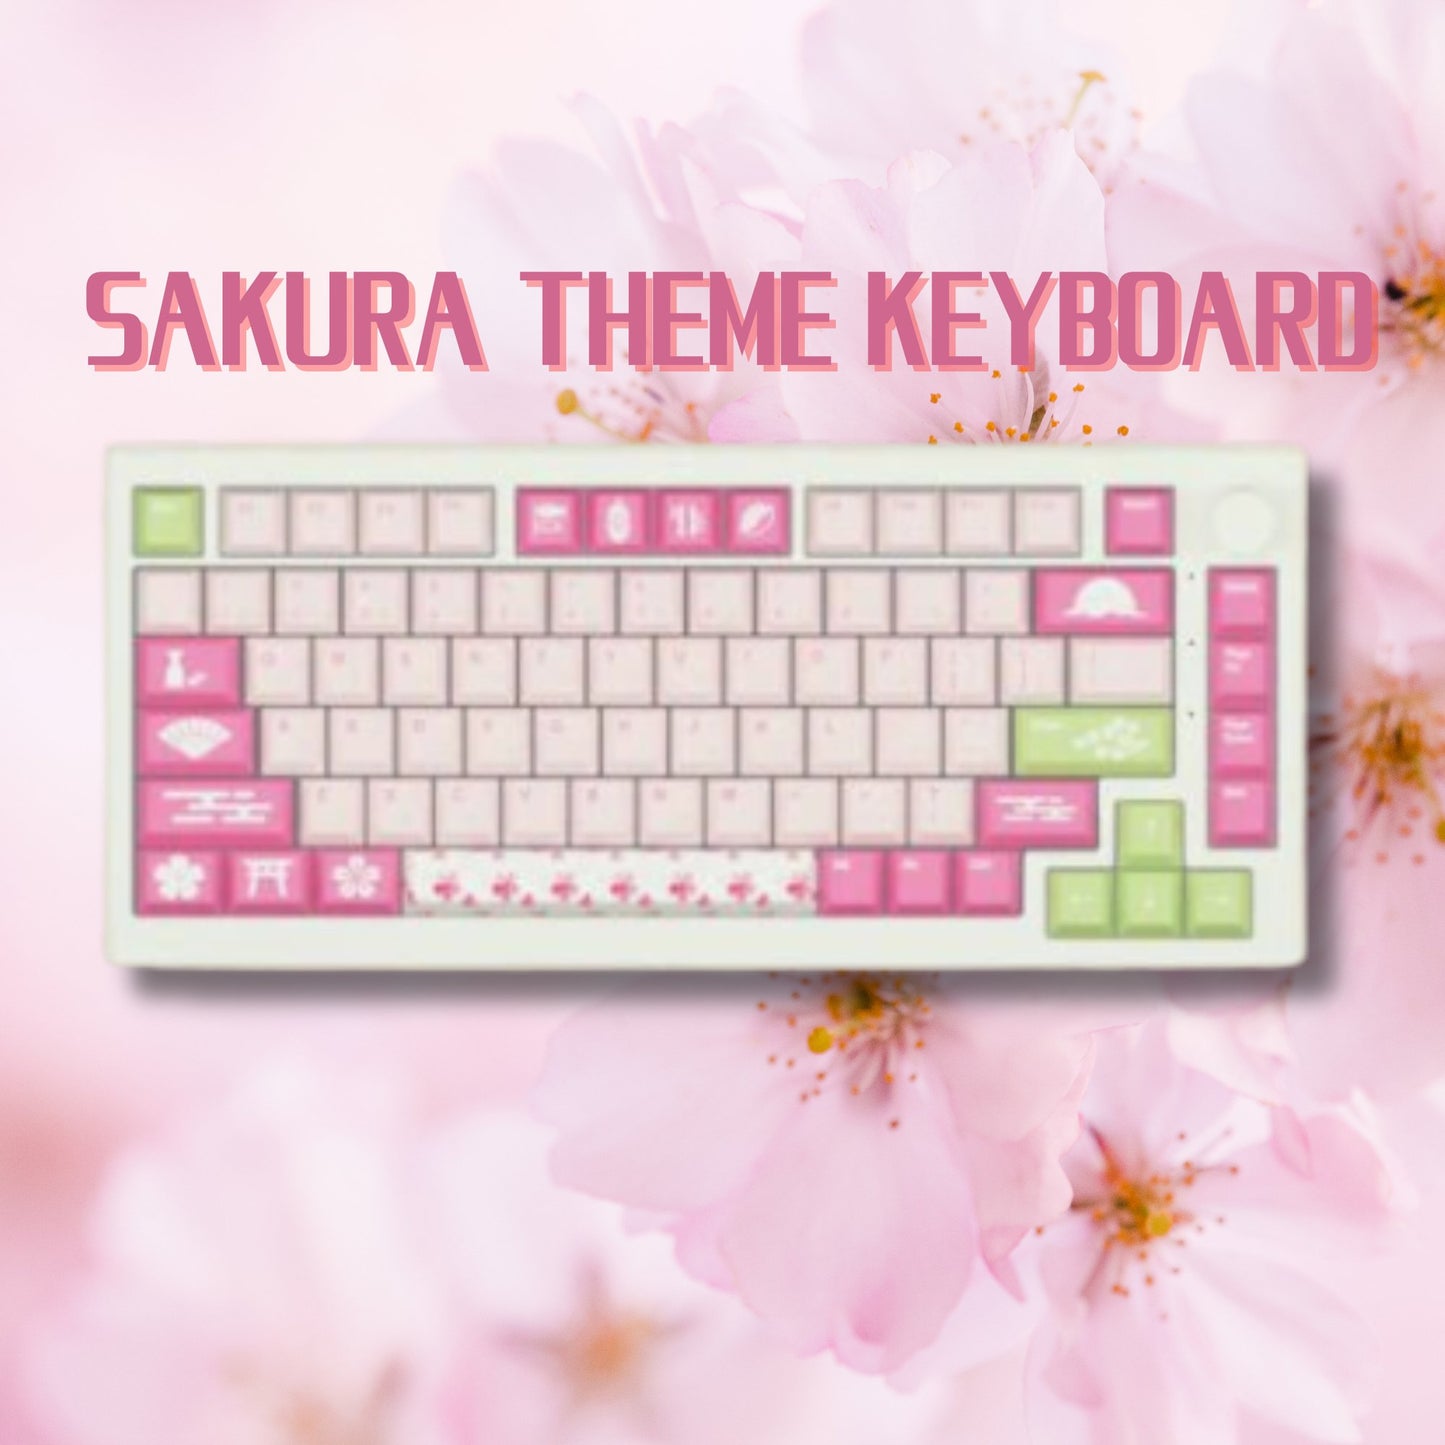 Alpha 82 - 75% Sakura Mechanical Keyboard - Goblintechkeys